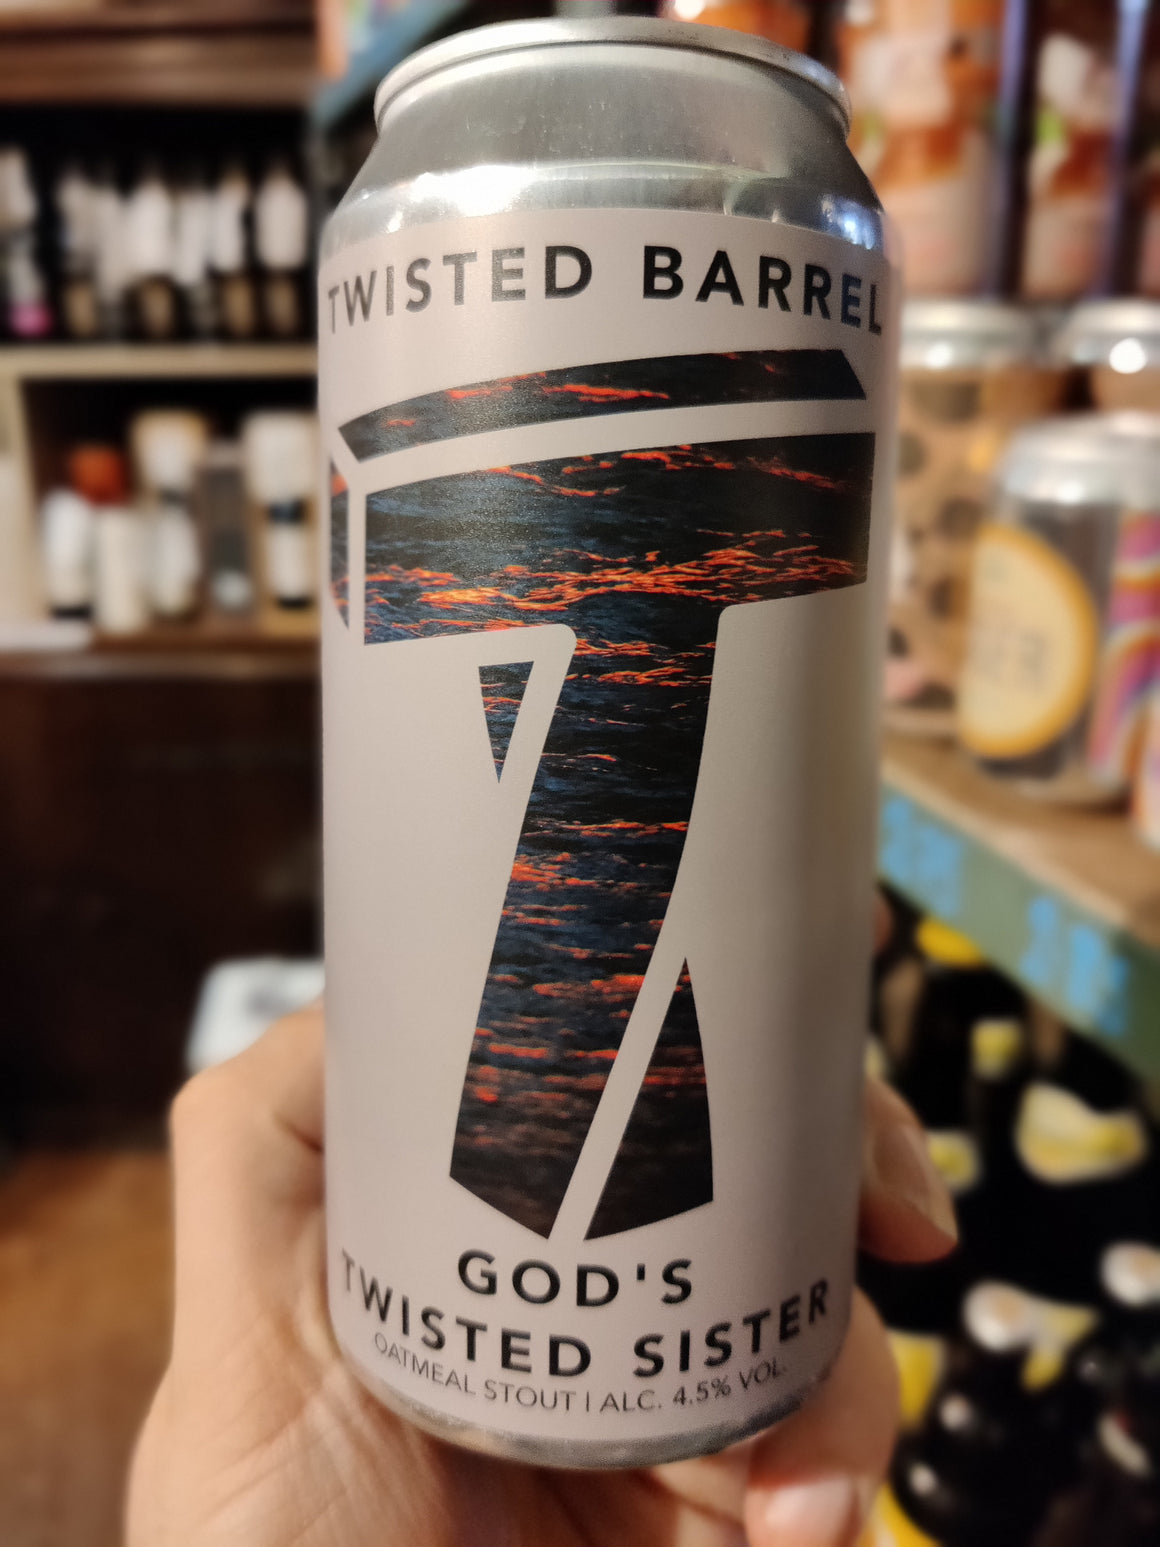 Twisted Barrel God's Twisted Sister 4.5%